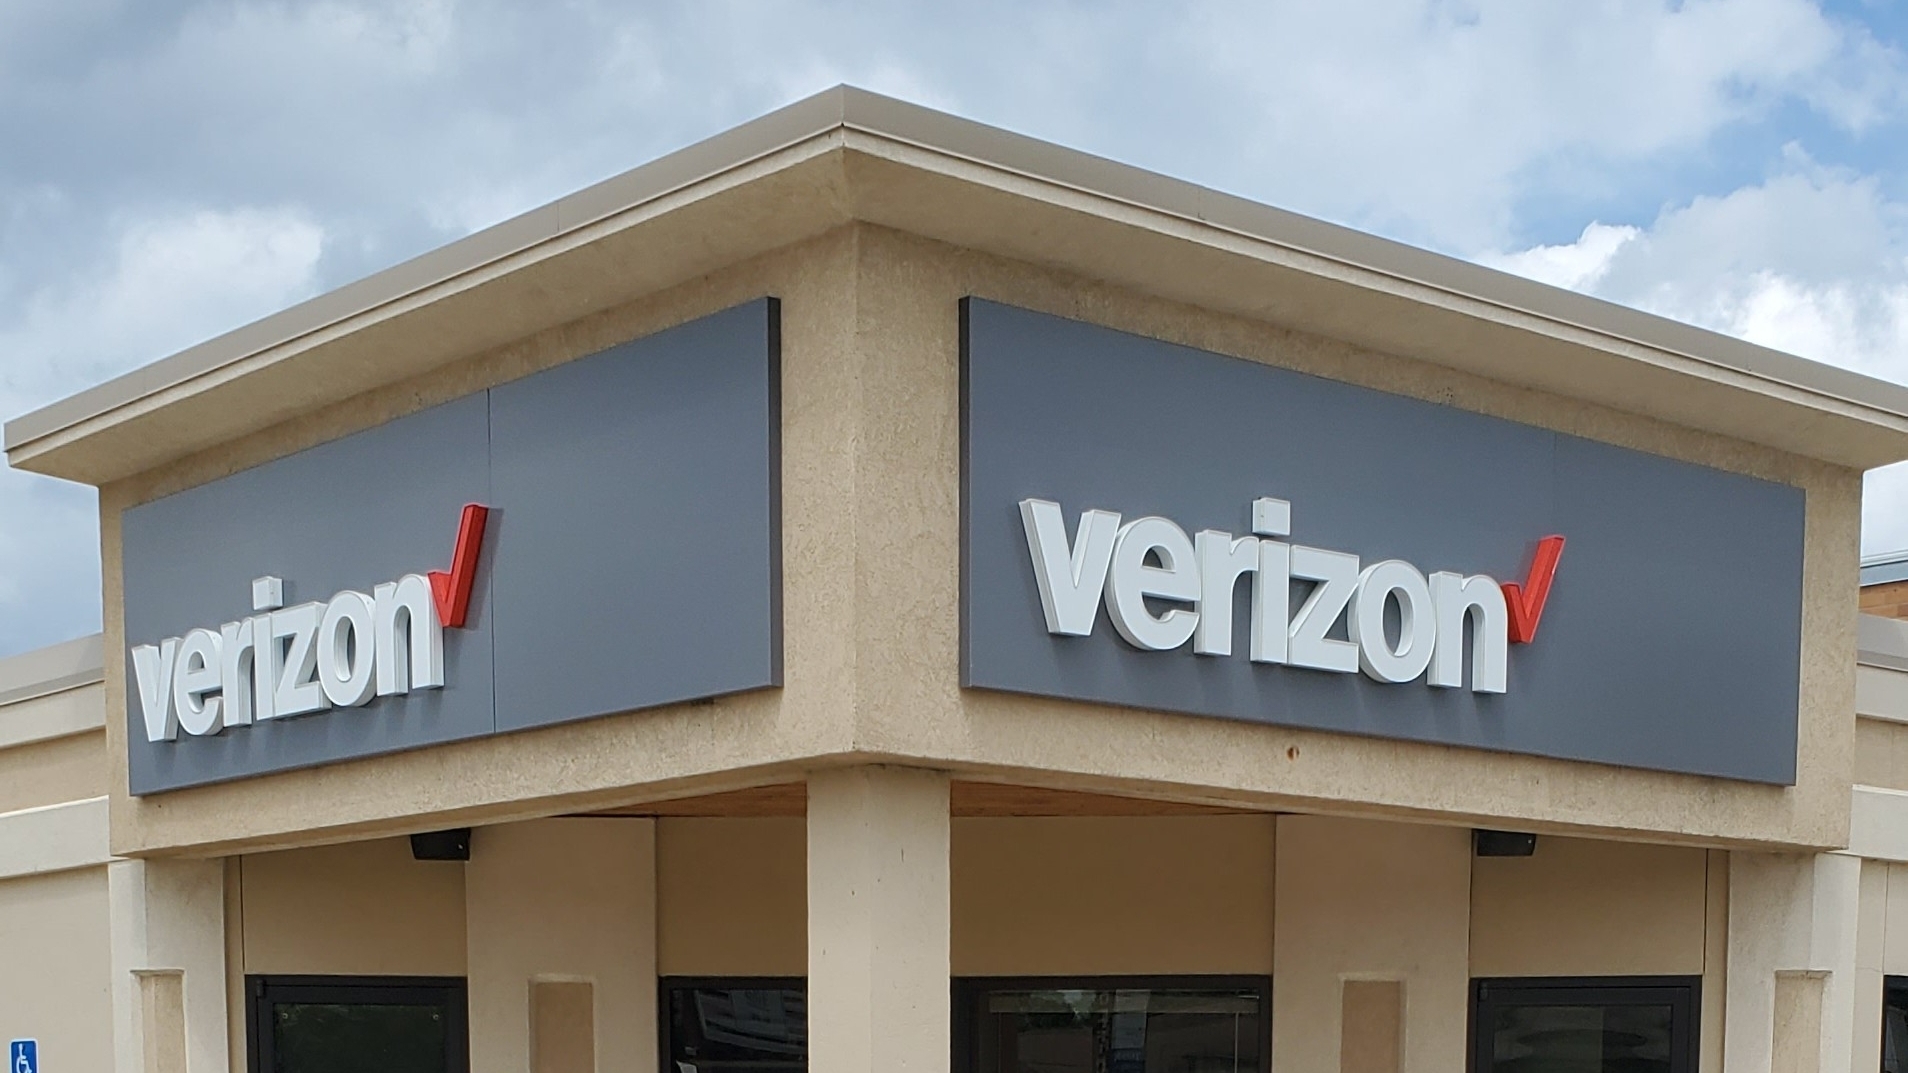 Wireless World - Verizon Retailer